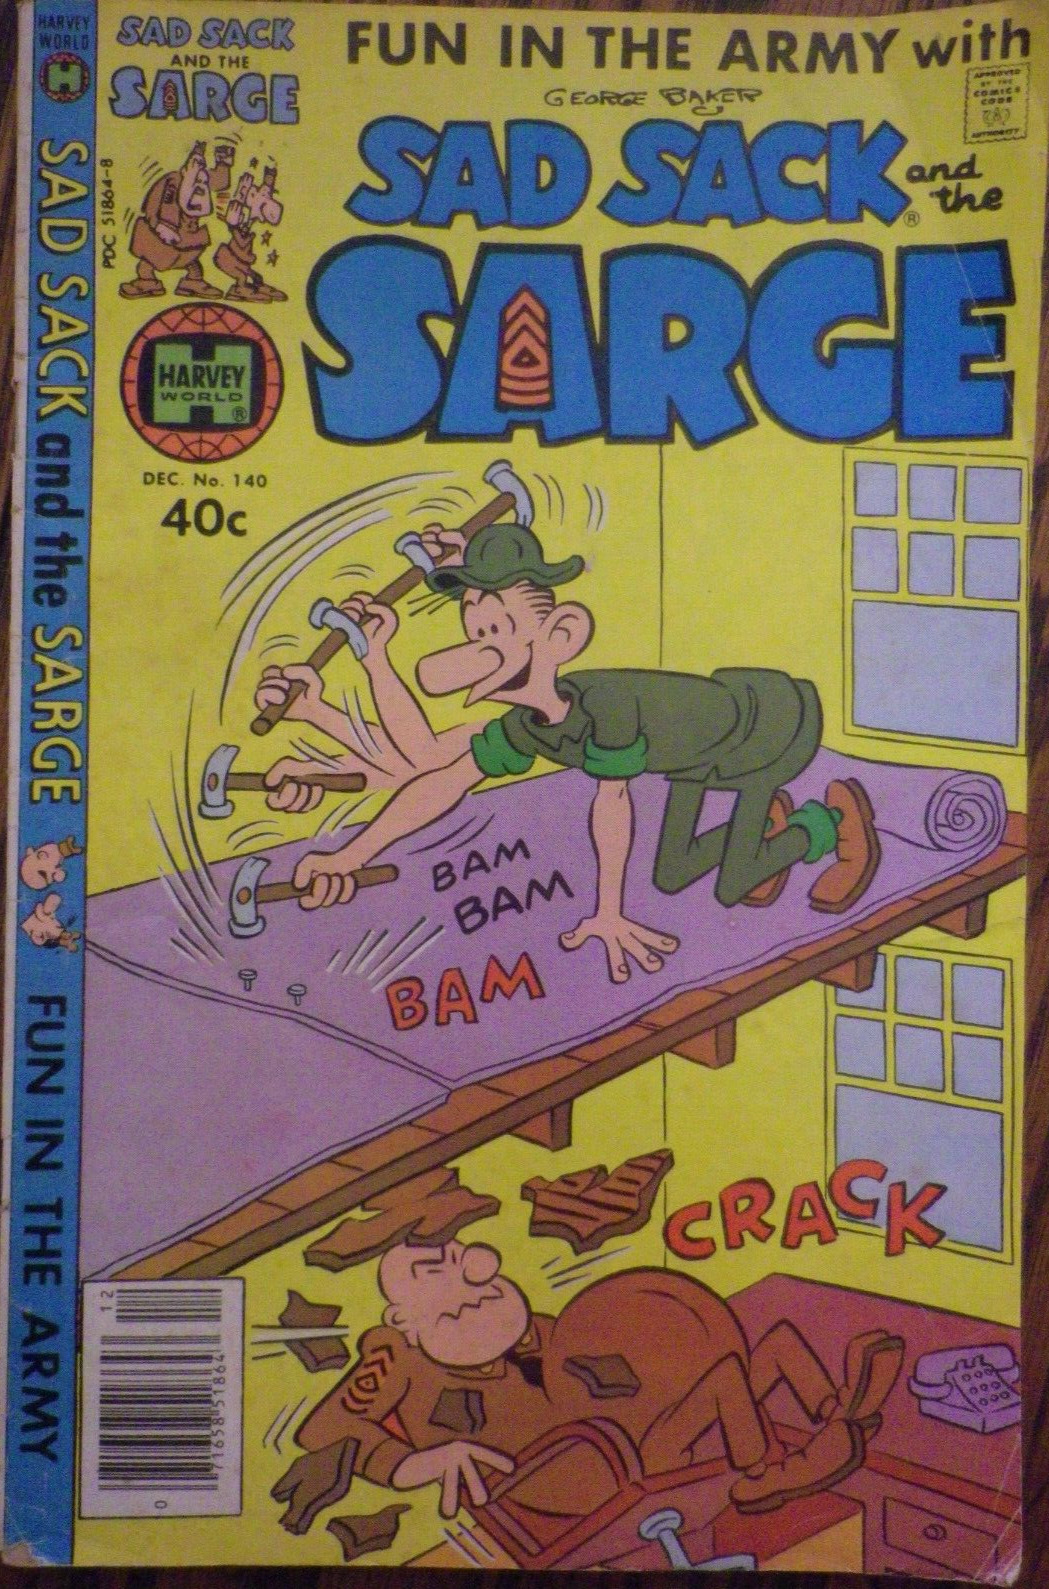 Sad Sack And The Sarge #140 - Dec 1979 - Harvey Comics - VERY NICE - Look